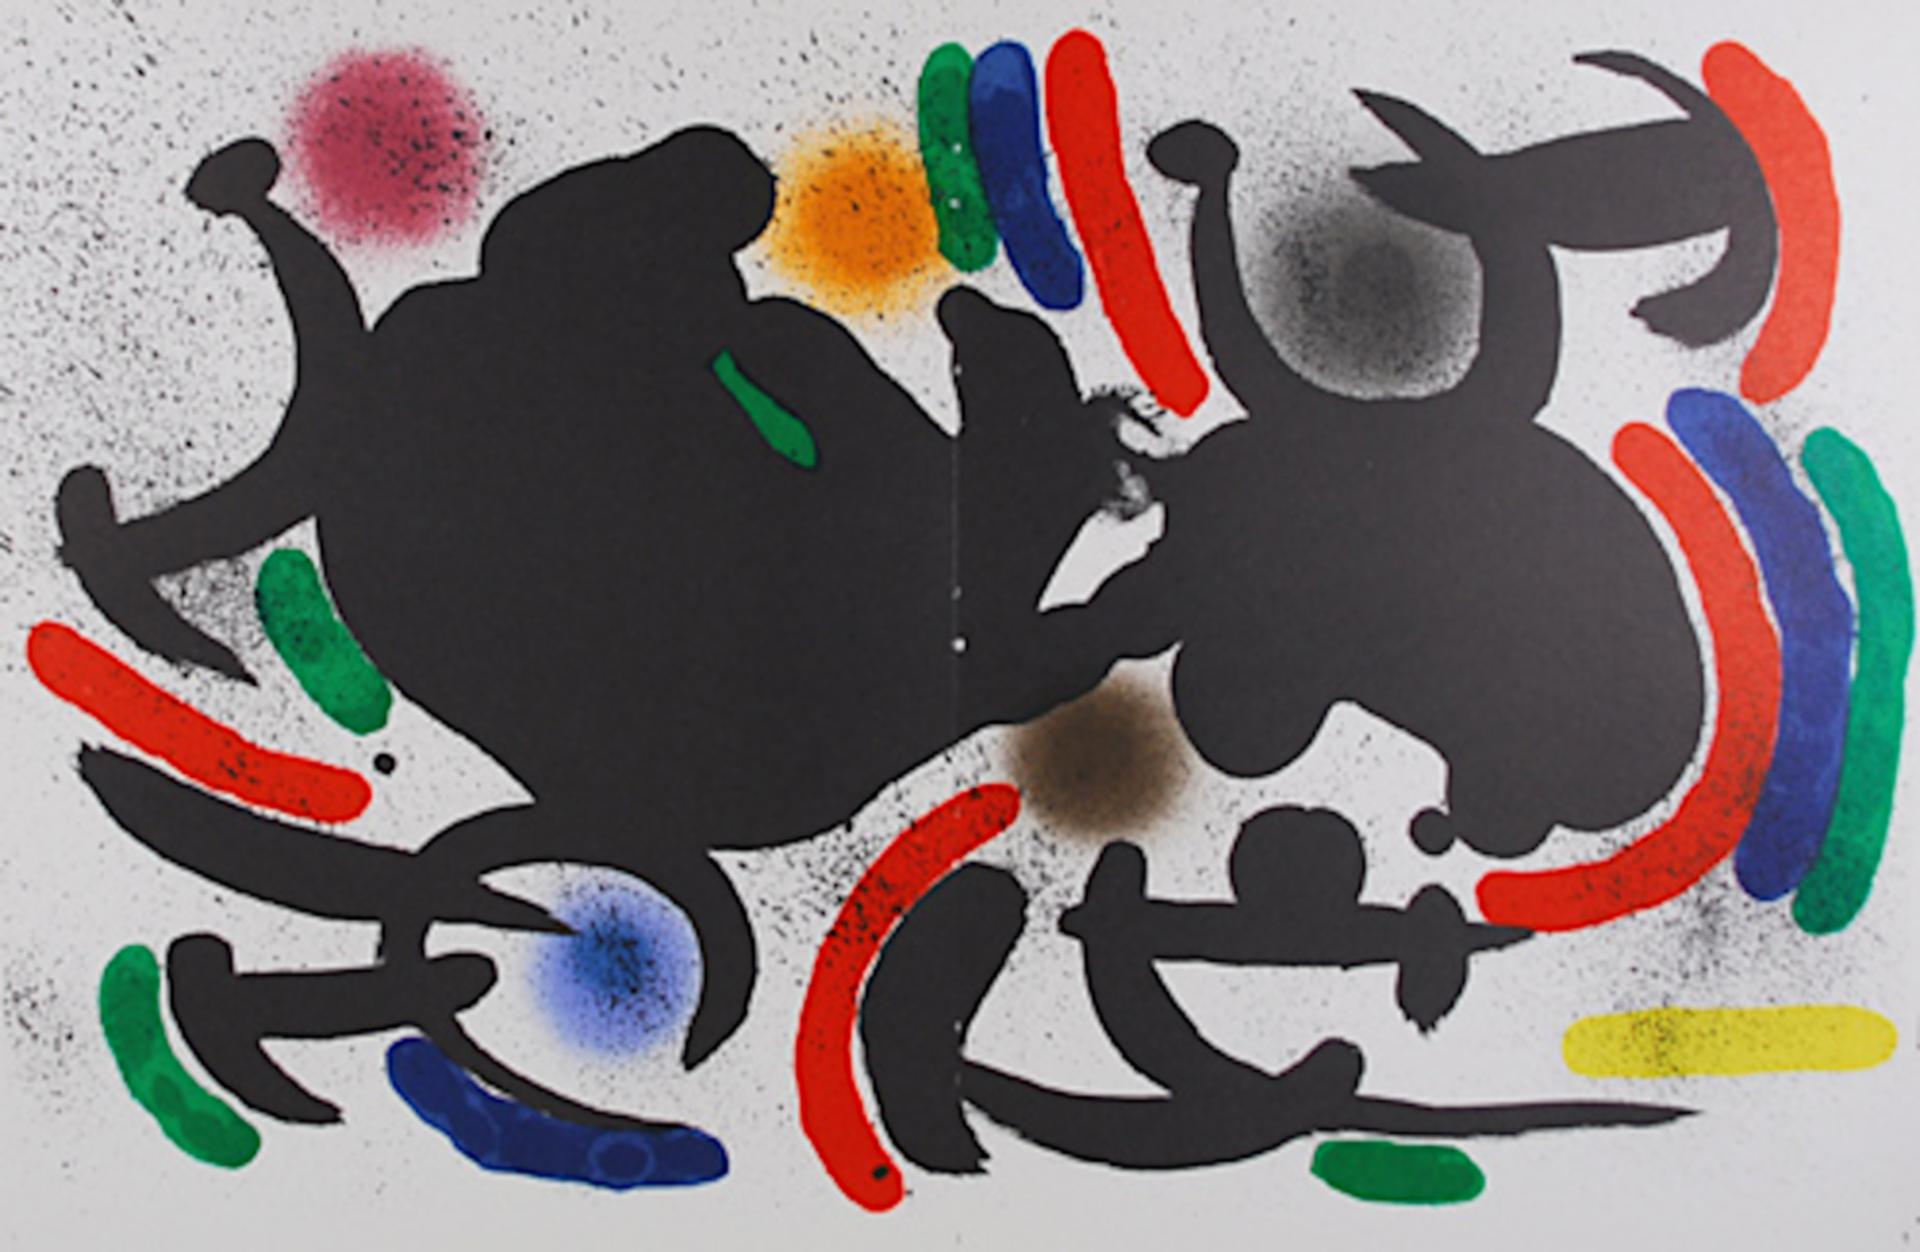 Joan Miró - "Original Lithography VII" - color lithography - mourlot 863